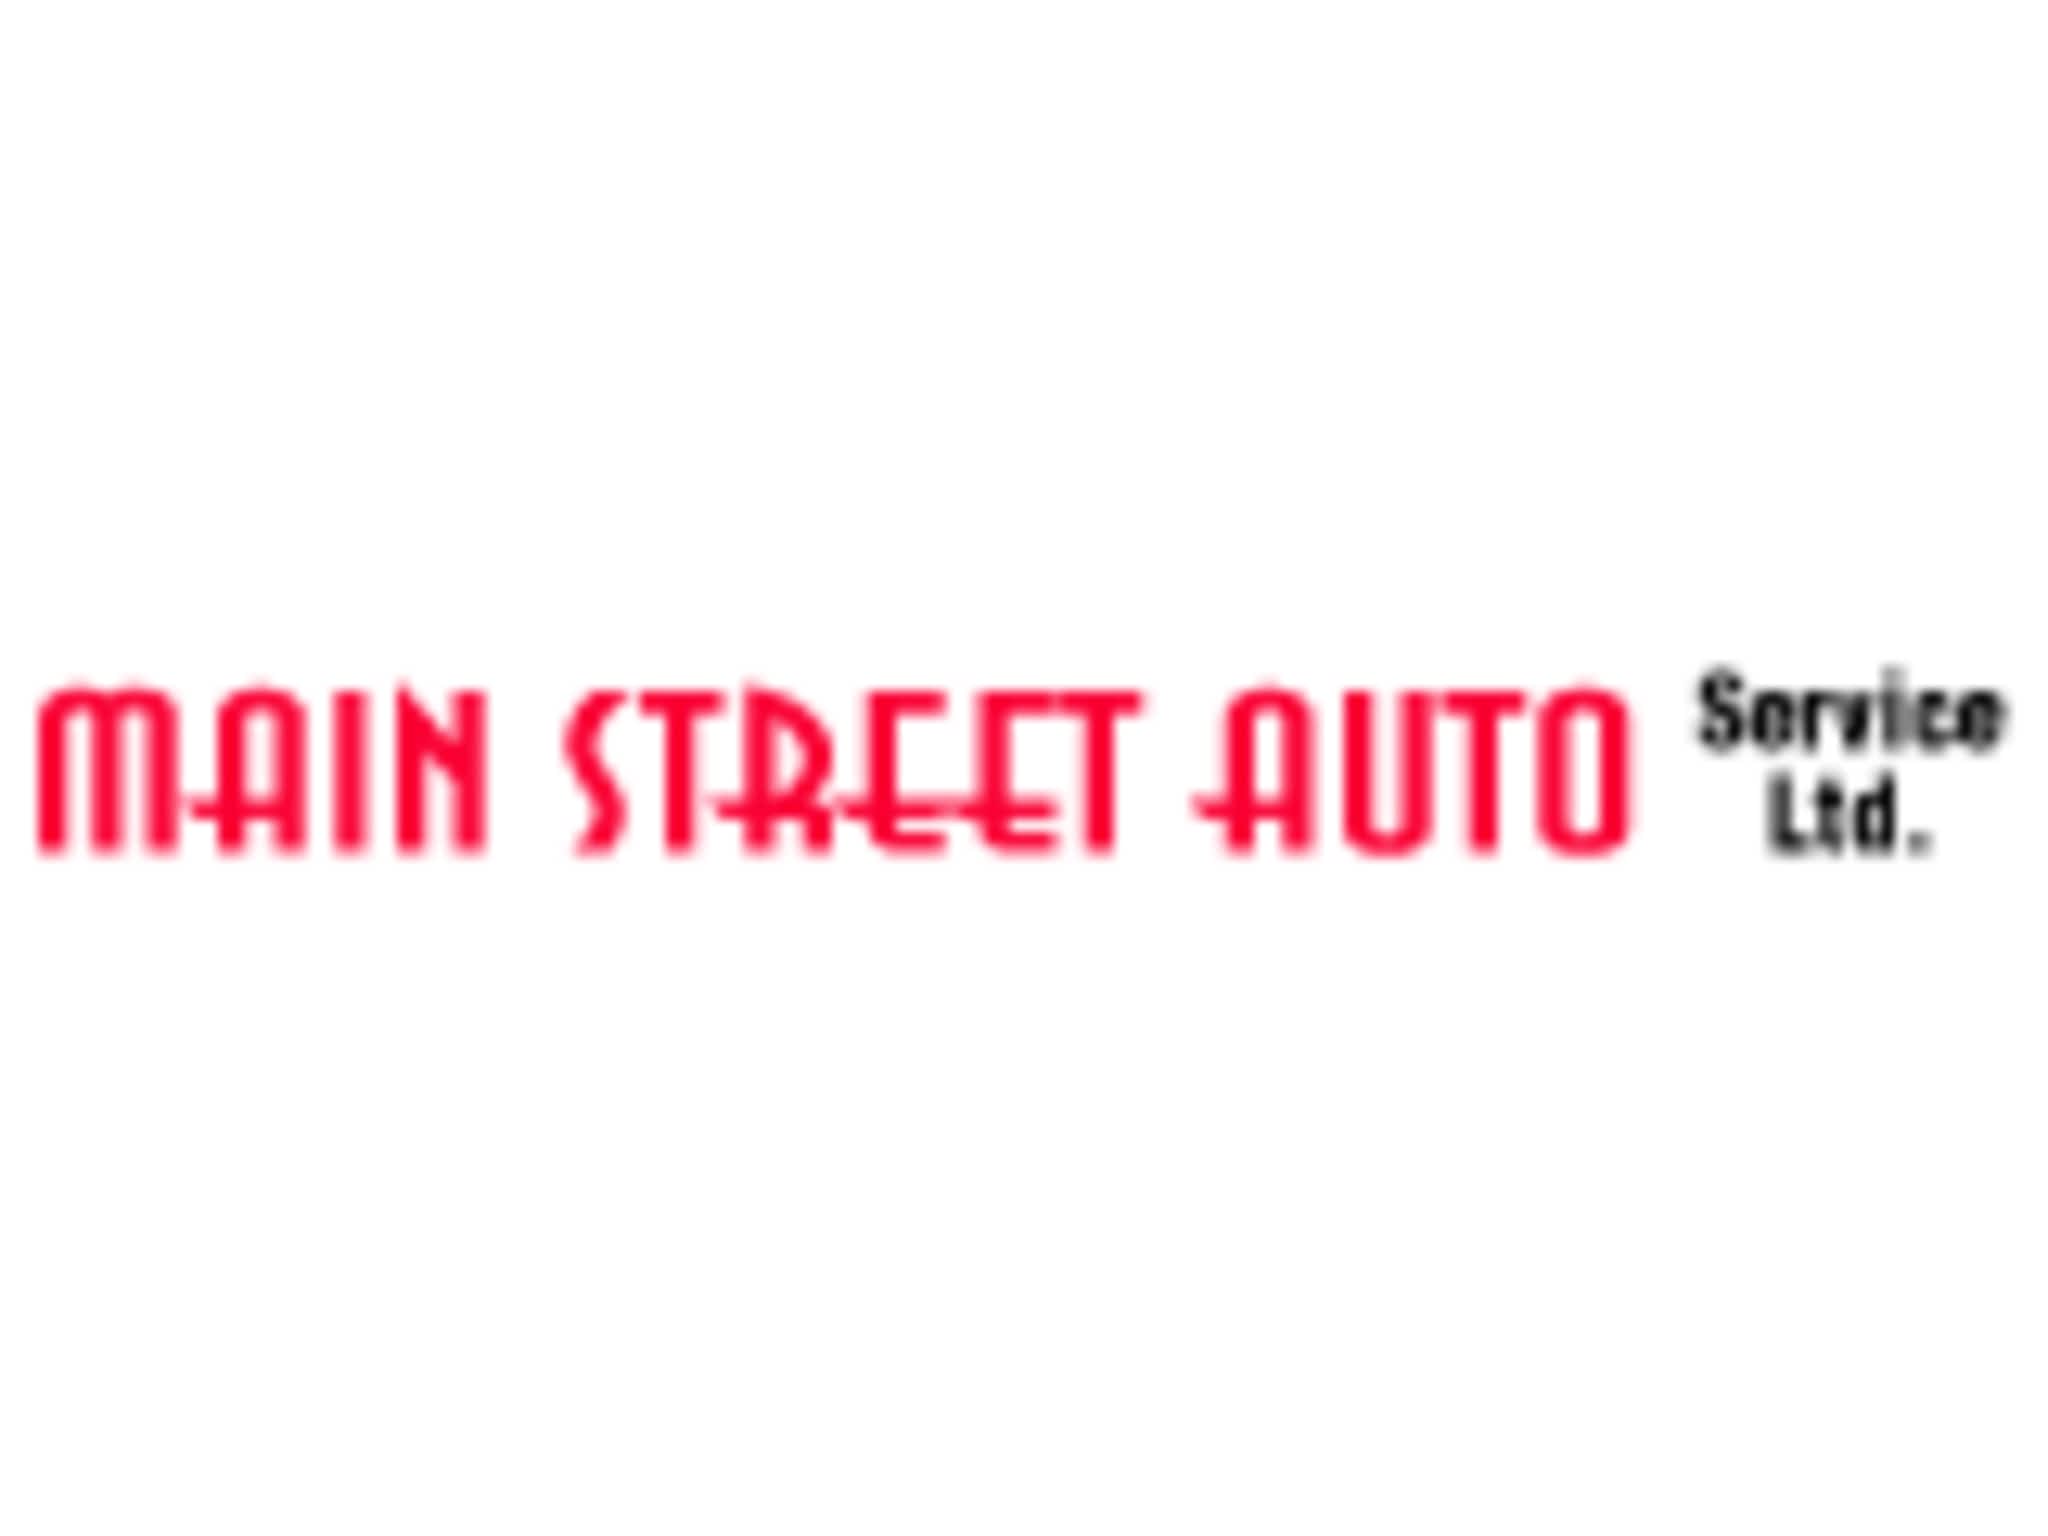 photo Main Street Auto Service Ltd